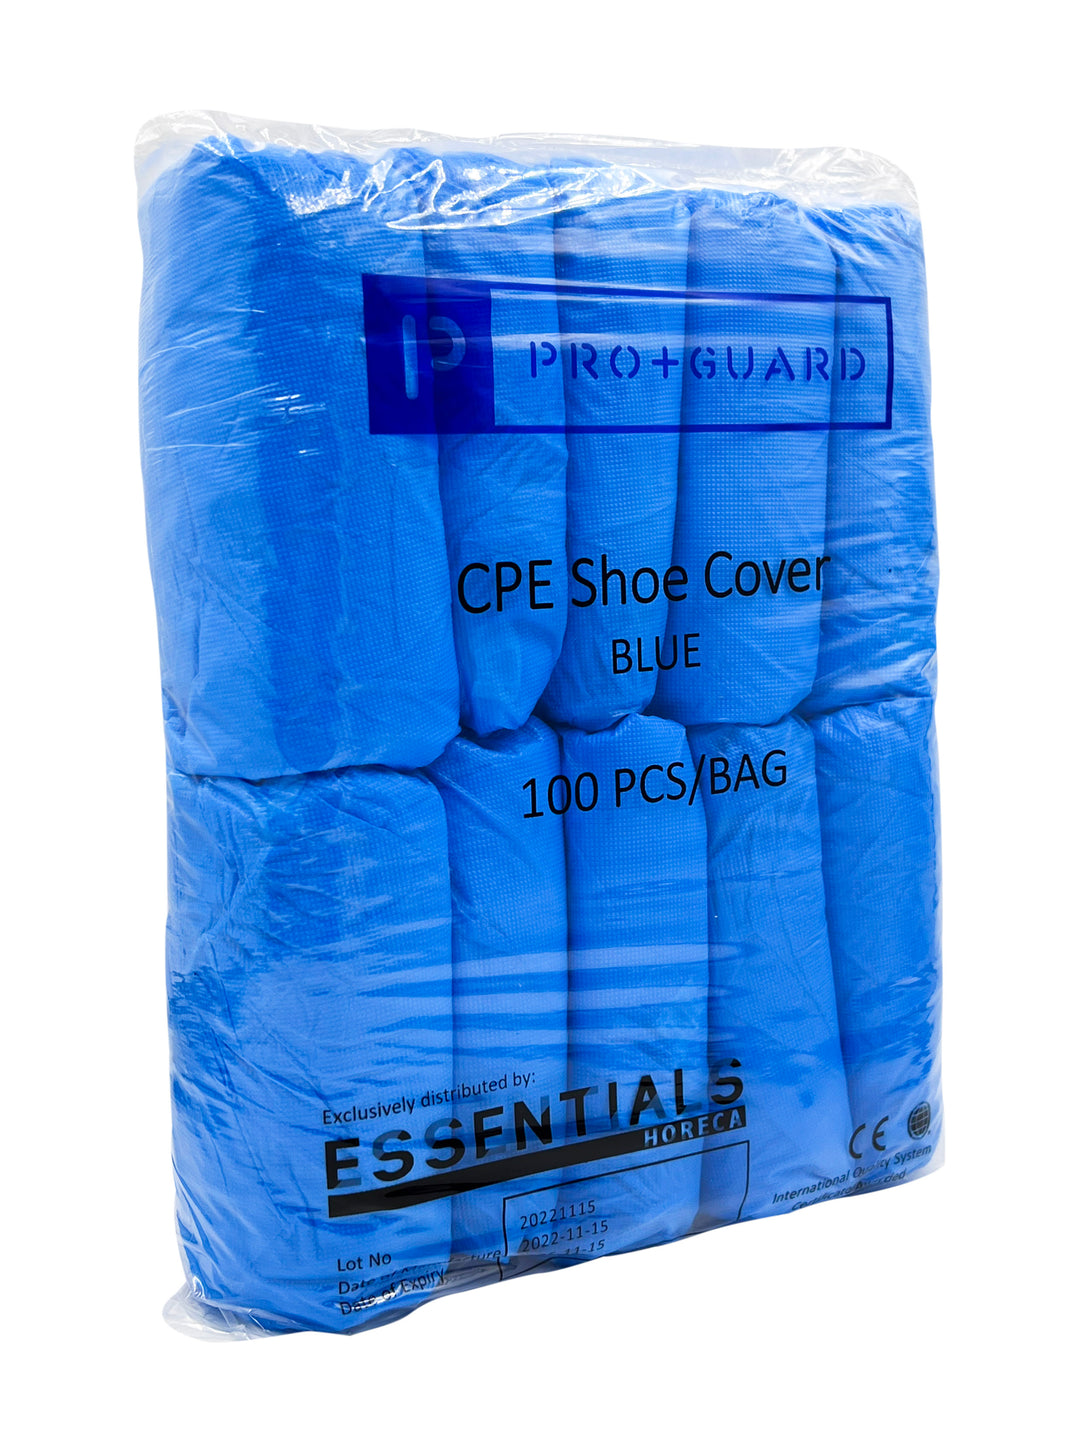 Pro+Guard CPE Shoe Cover (Blue)